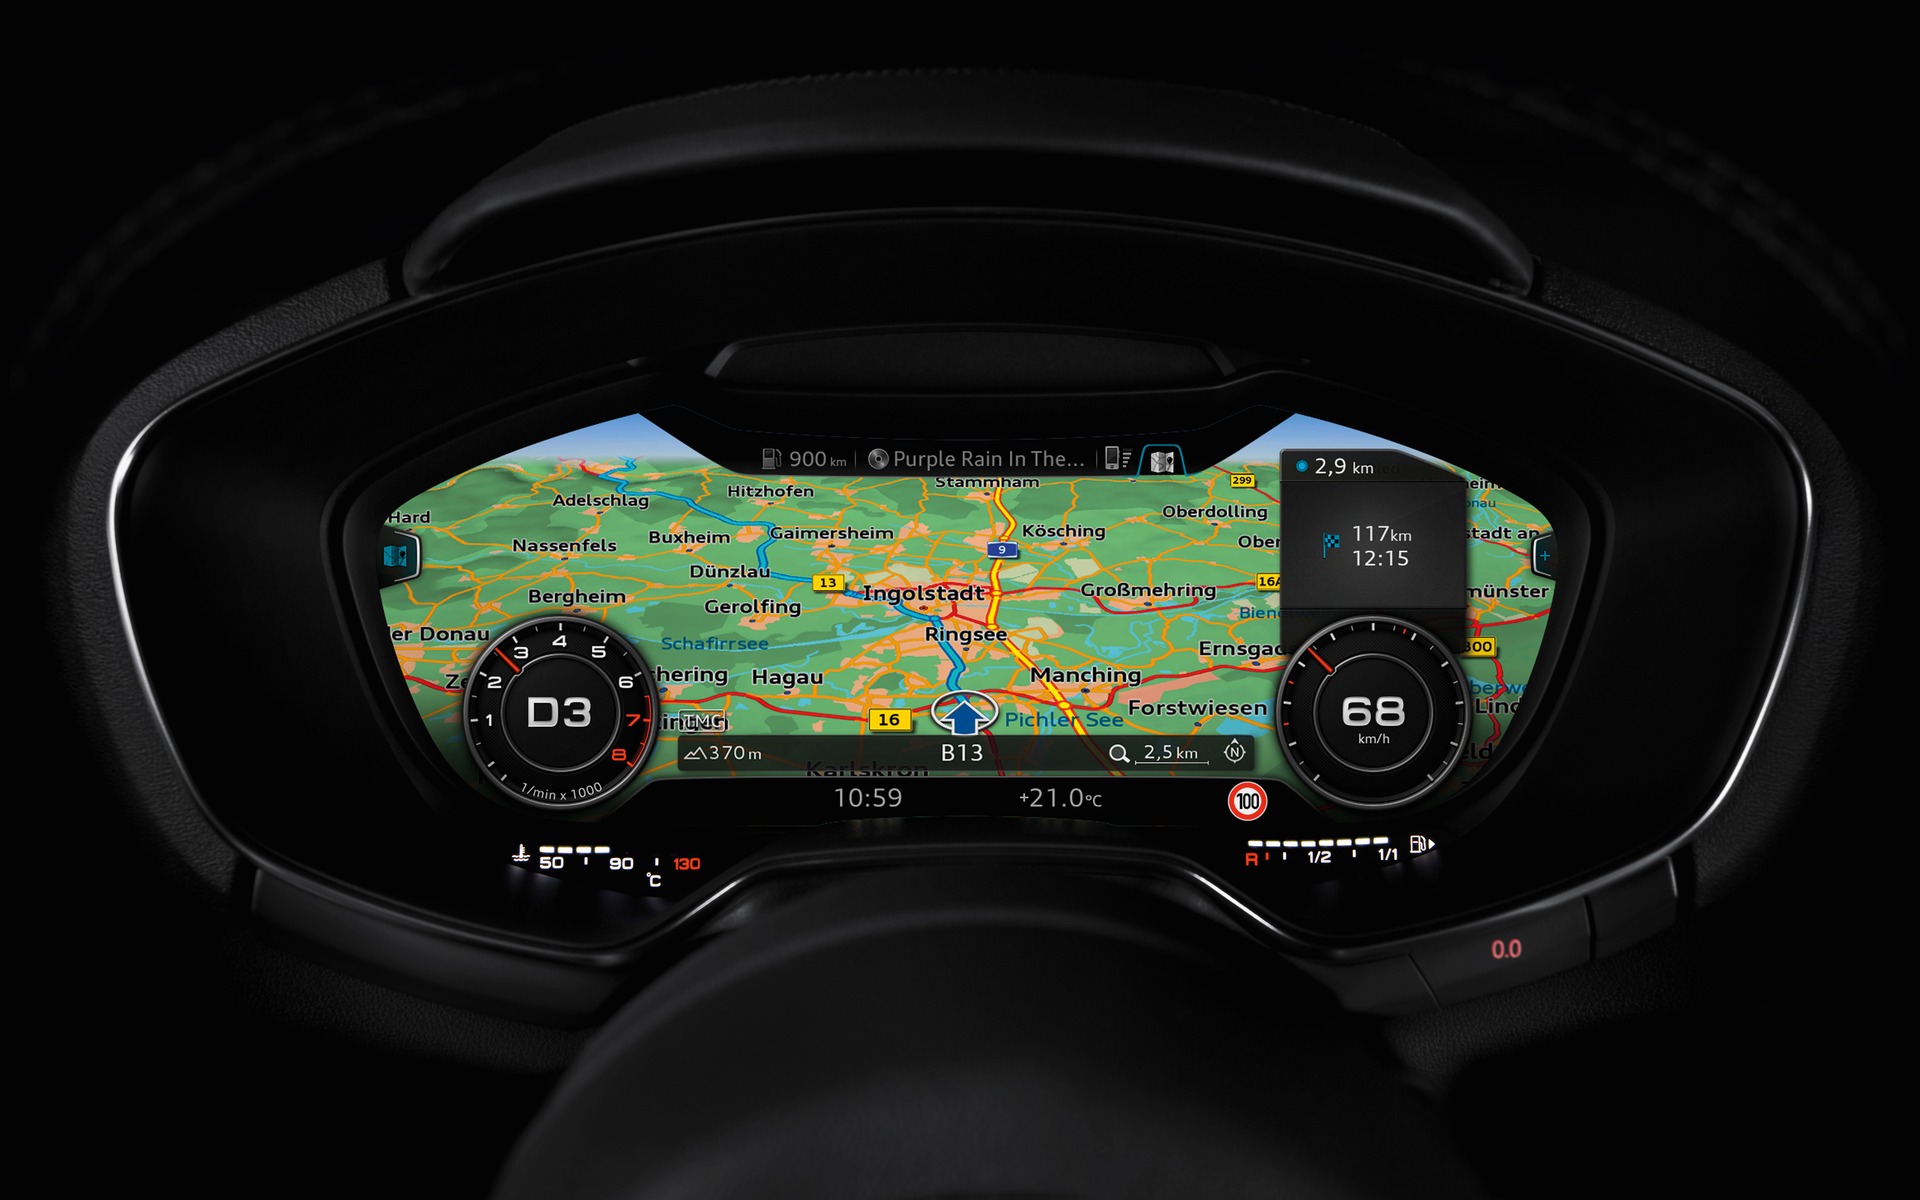 Some Audi virtual cockpit displays are really impressive.